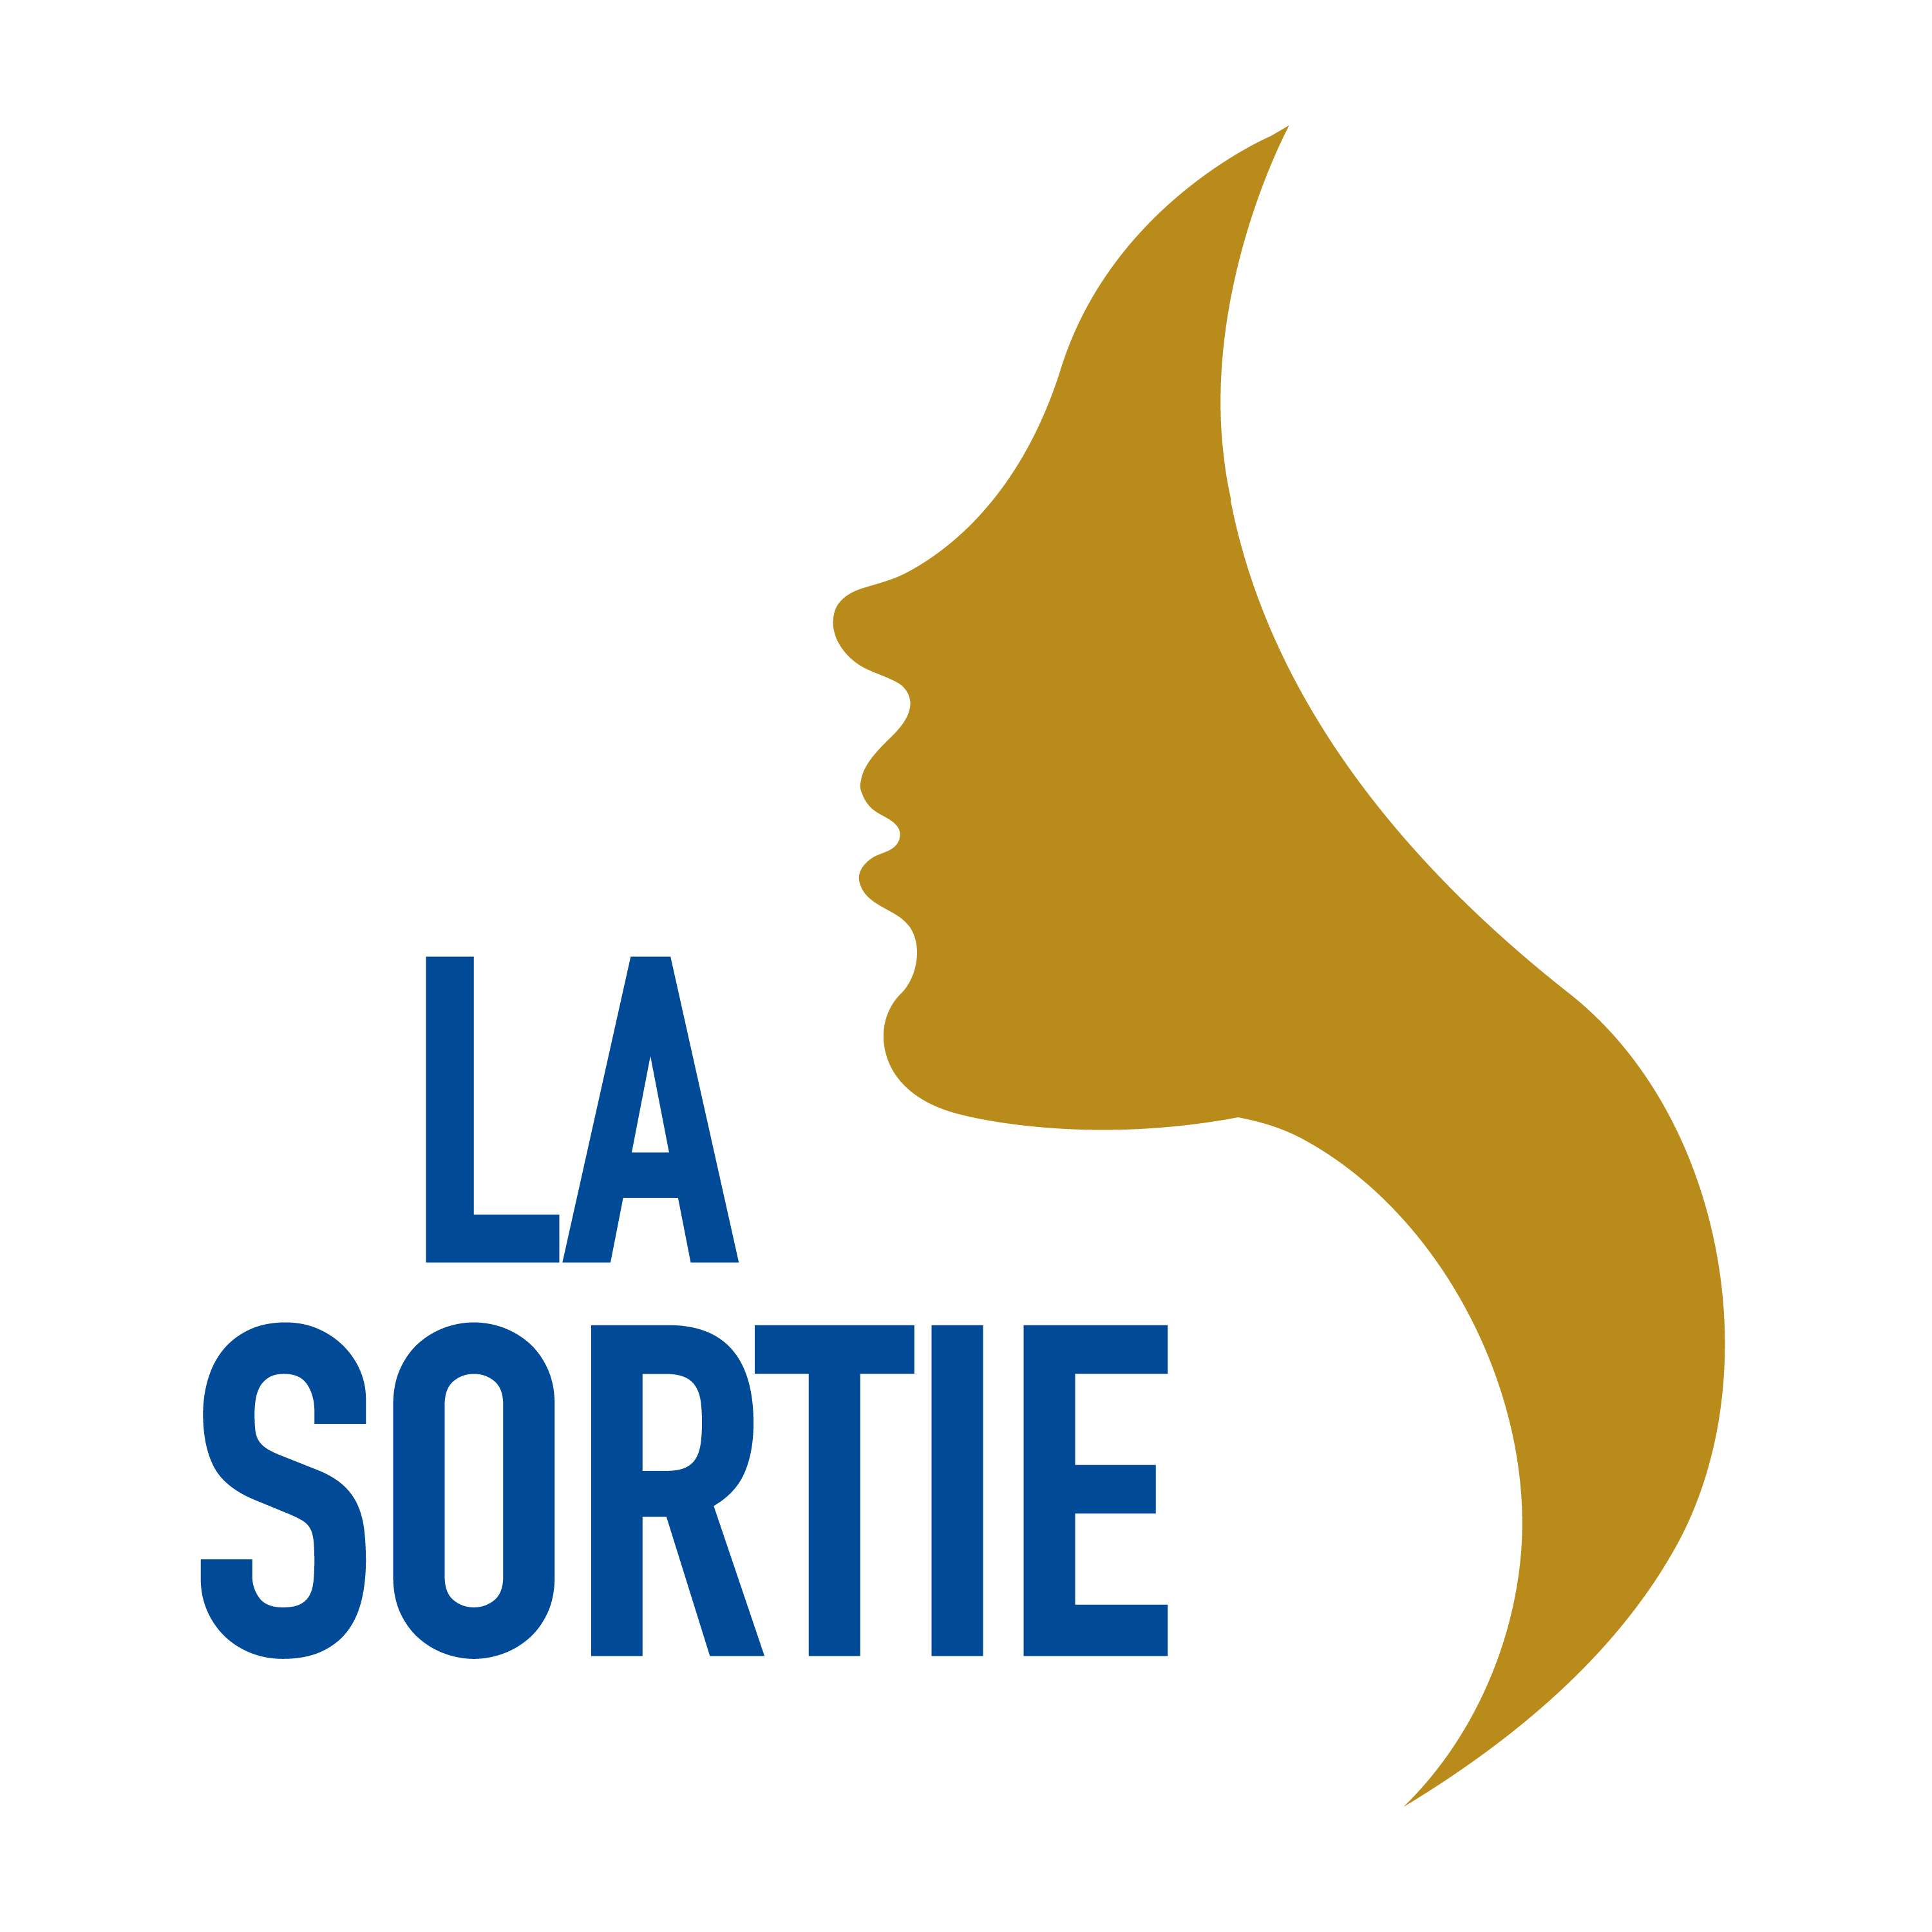 La Sortie logo